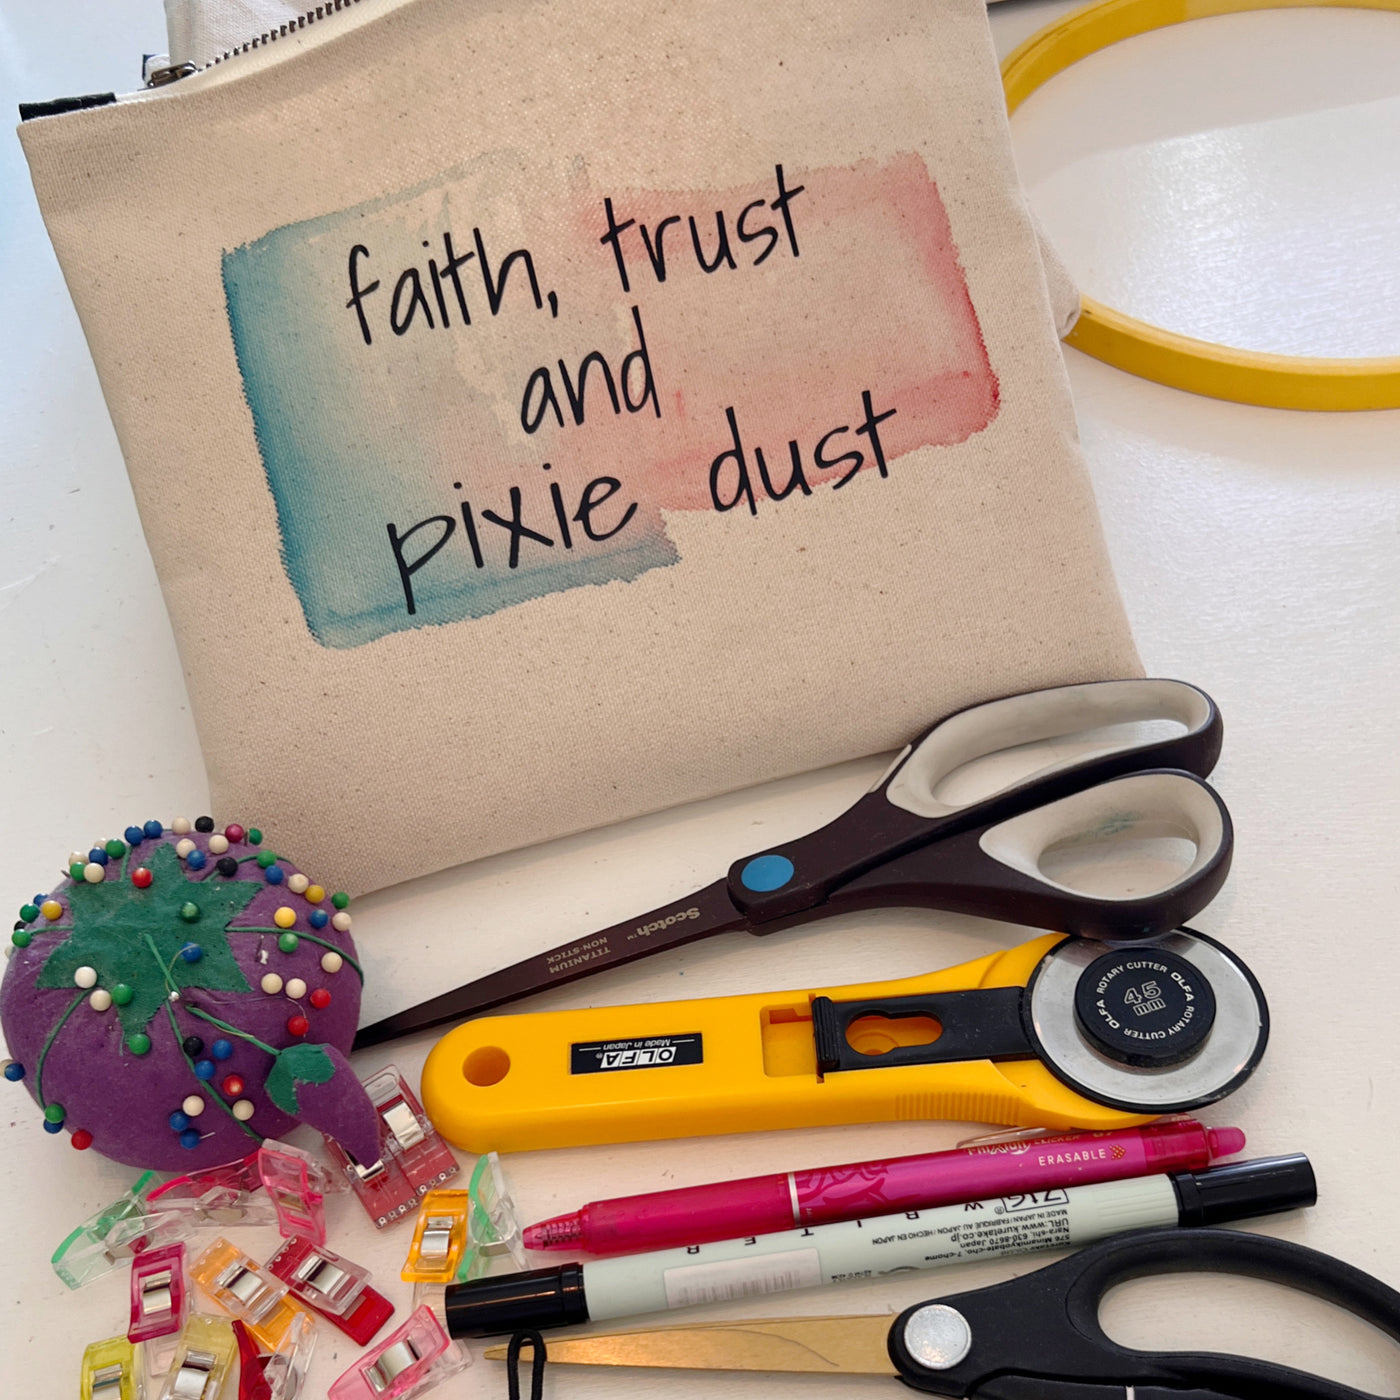 mini canvas painted zip bag pouch - faith, trust and pixie dust